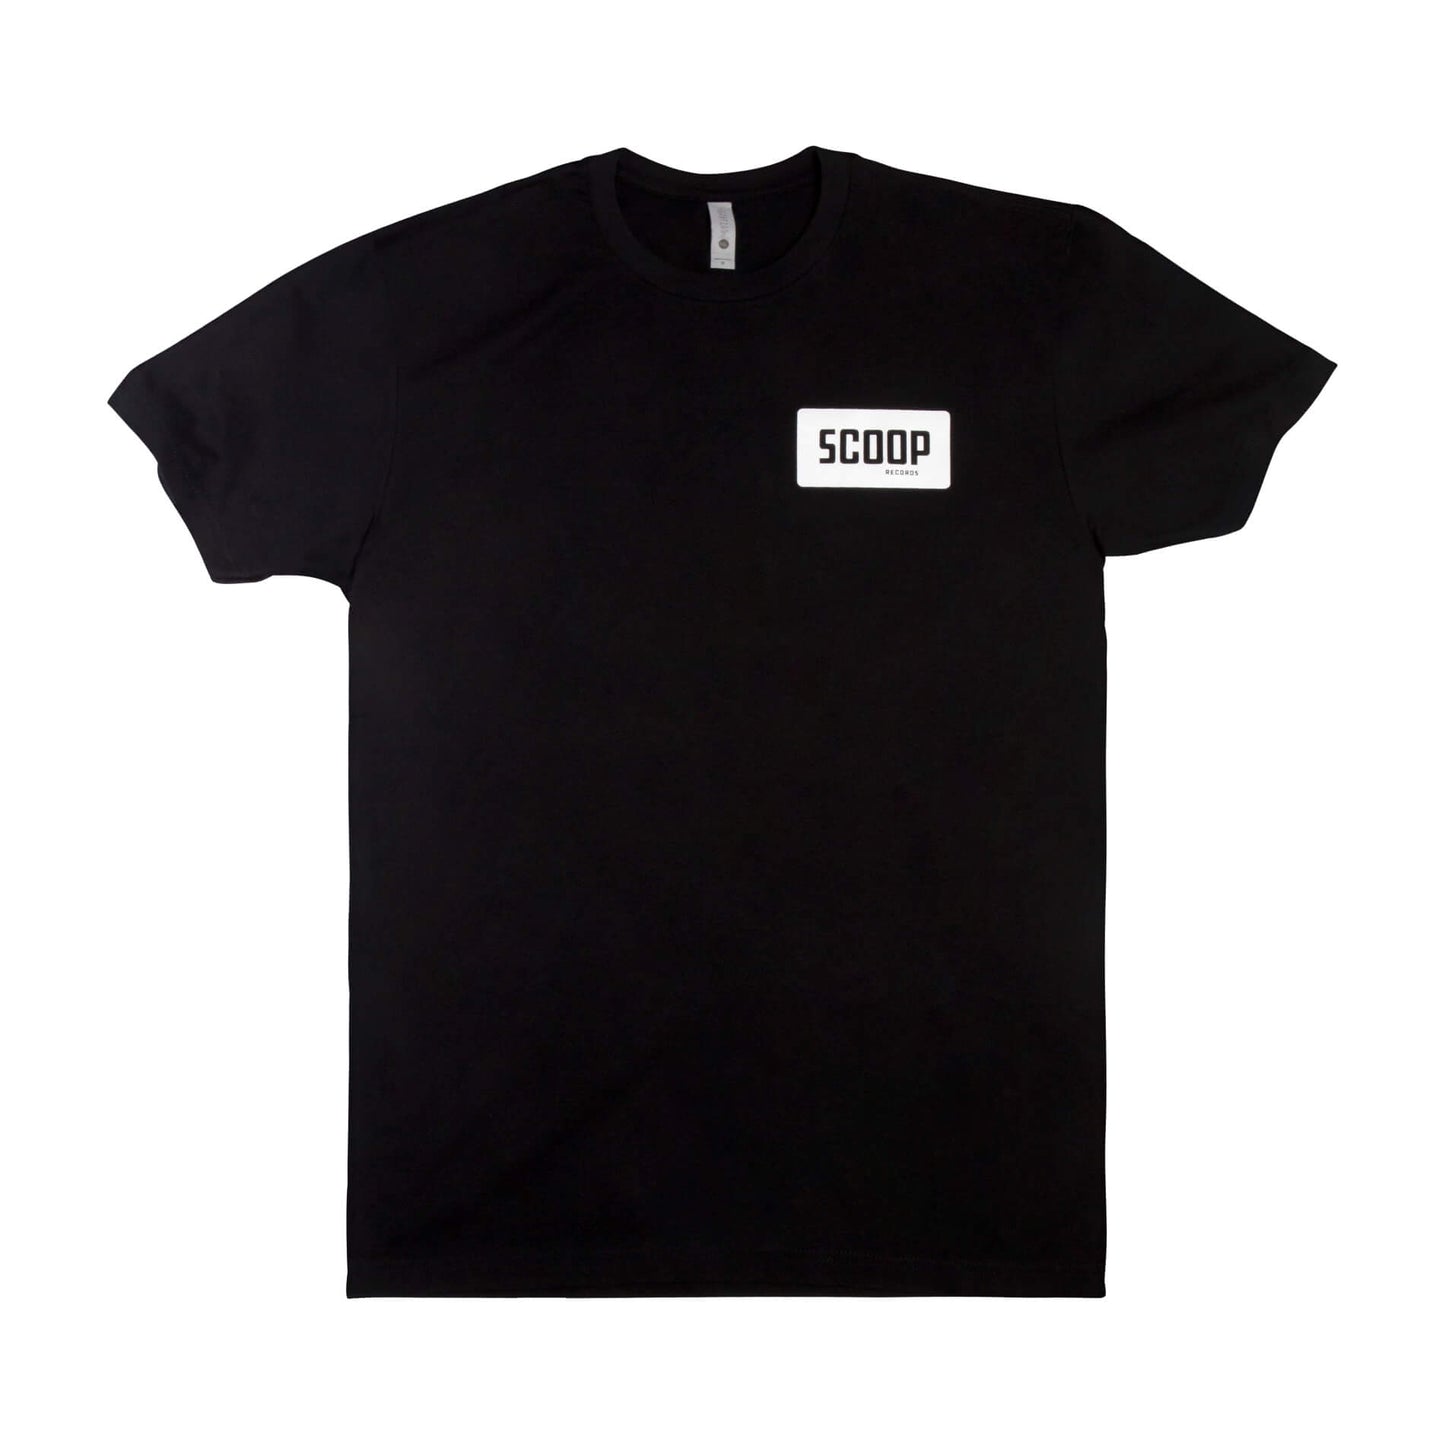 Scoop Records T-shirt - Black